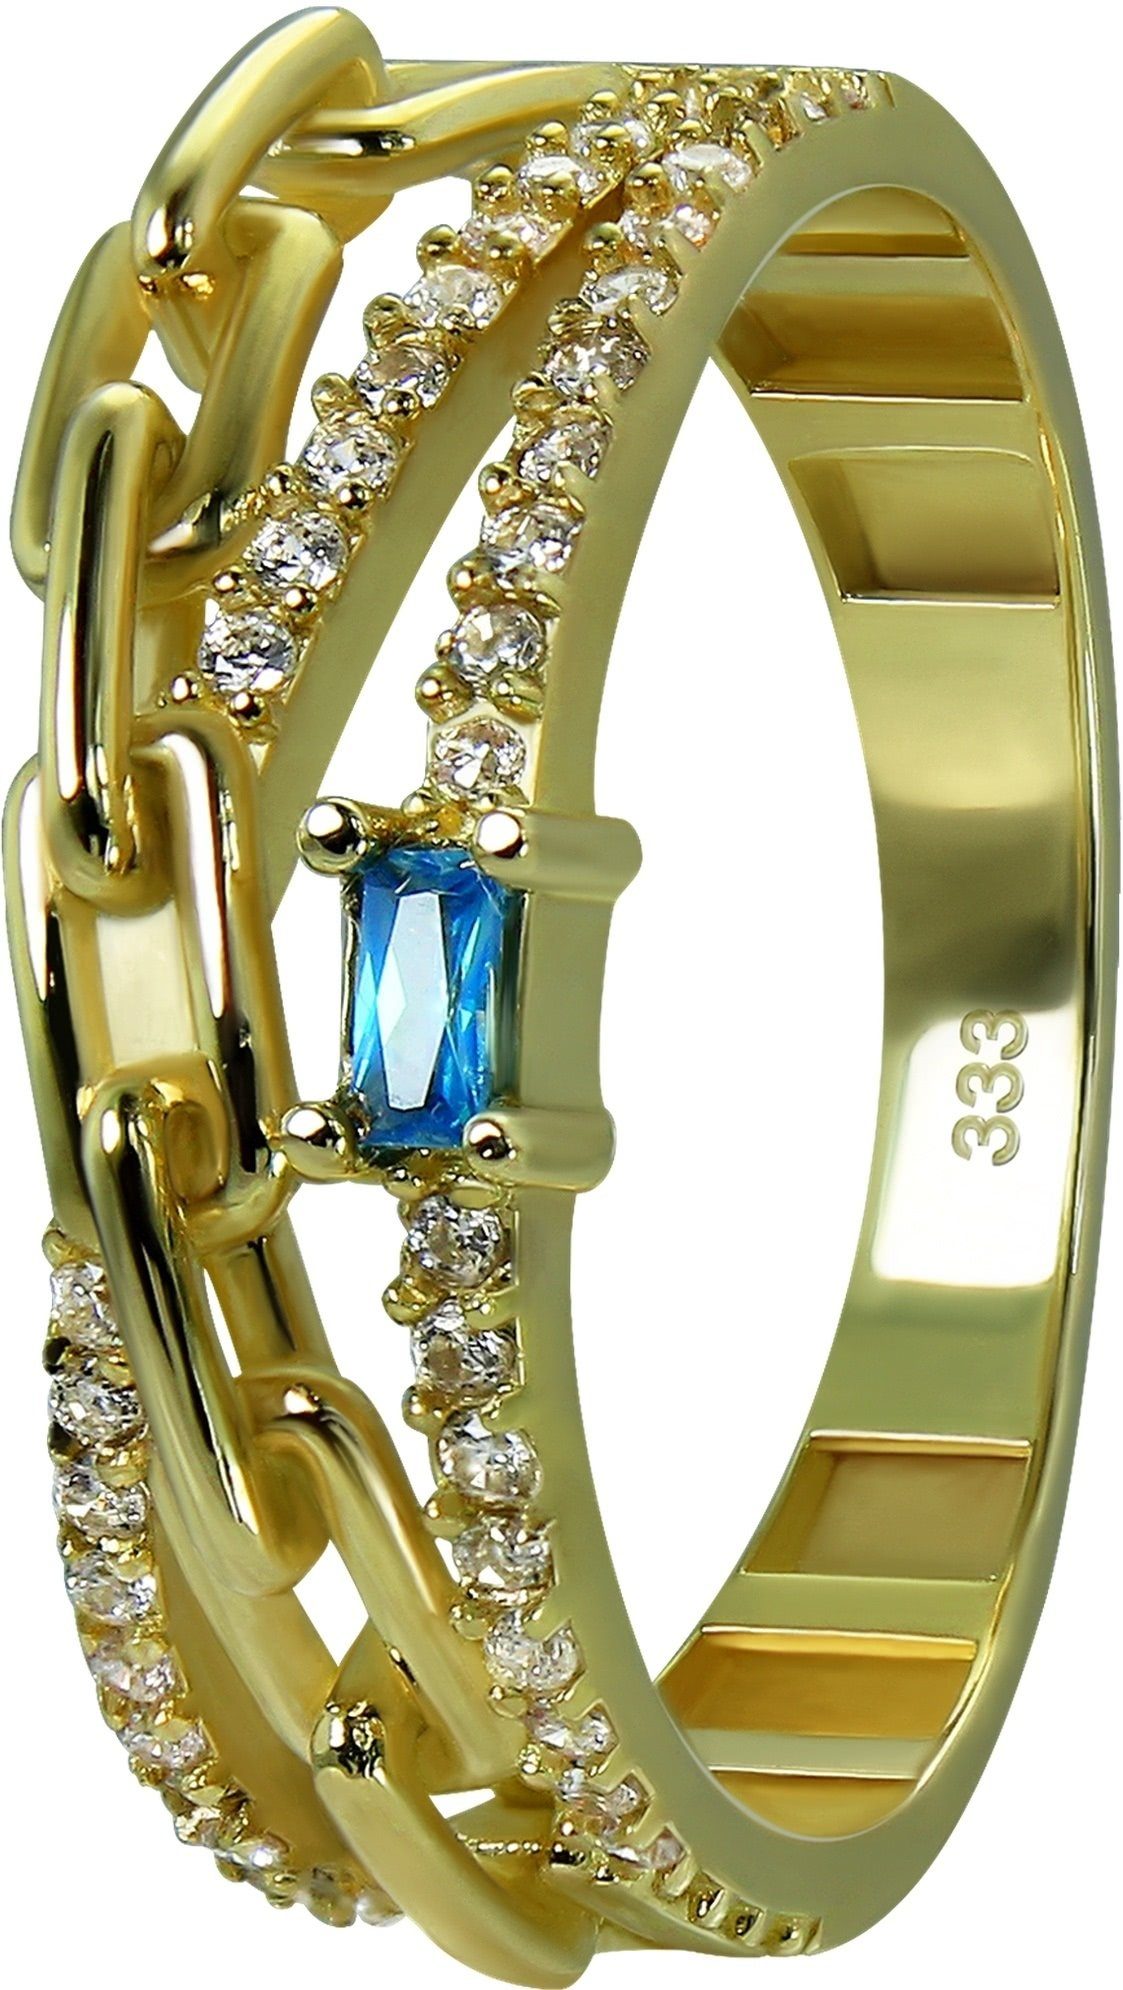 GoldDream Goldring GoldDream Gold Ring Glamour Gr.60 (Fingerring), Damen Ring Glamour 333 Gelbgold - 8 Karat, Farbe: gold, weiß, hellblau